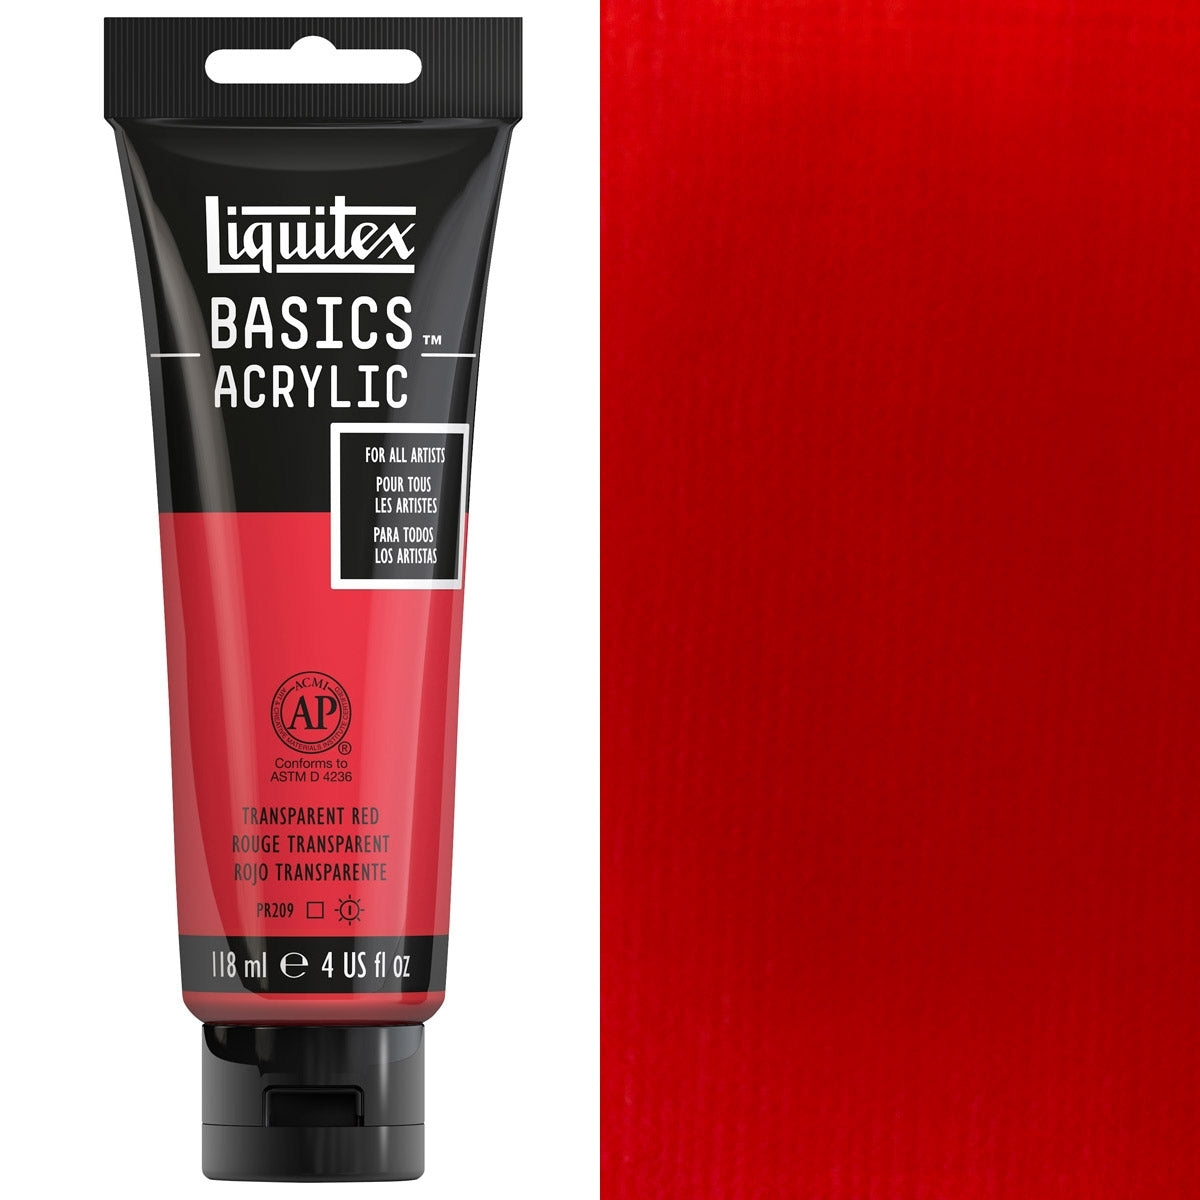 Liquitex - Basics Acryl -kleur - 118 ml - Transparant rood